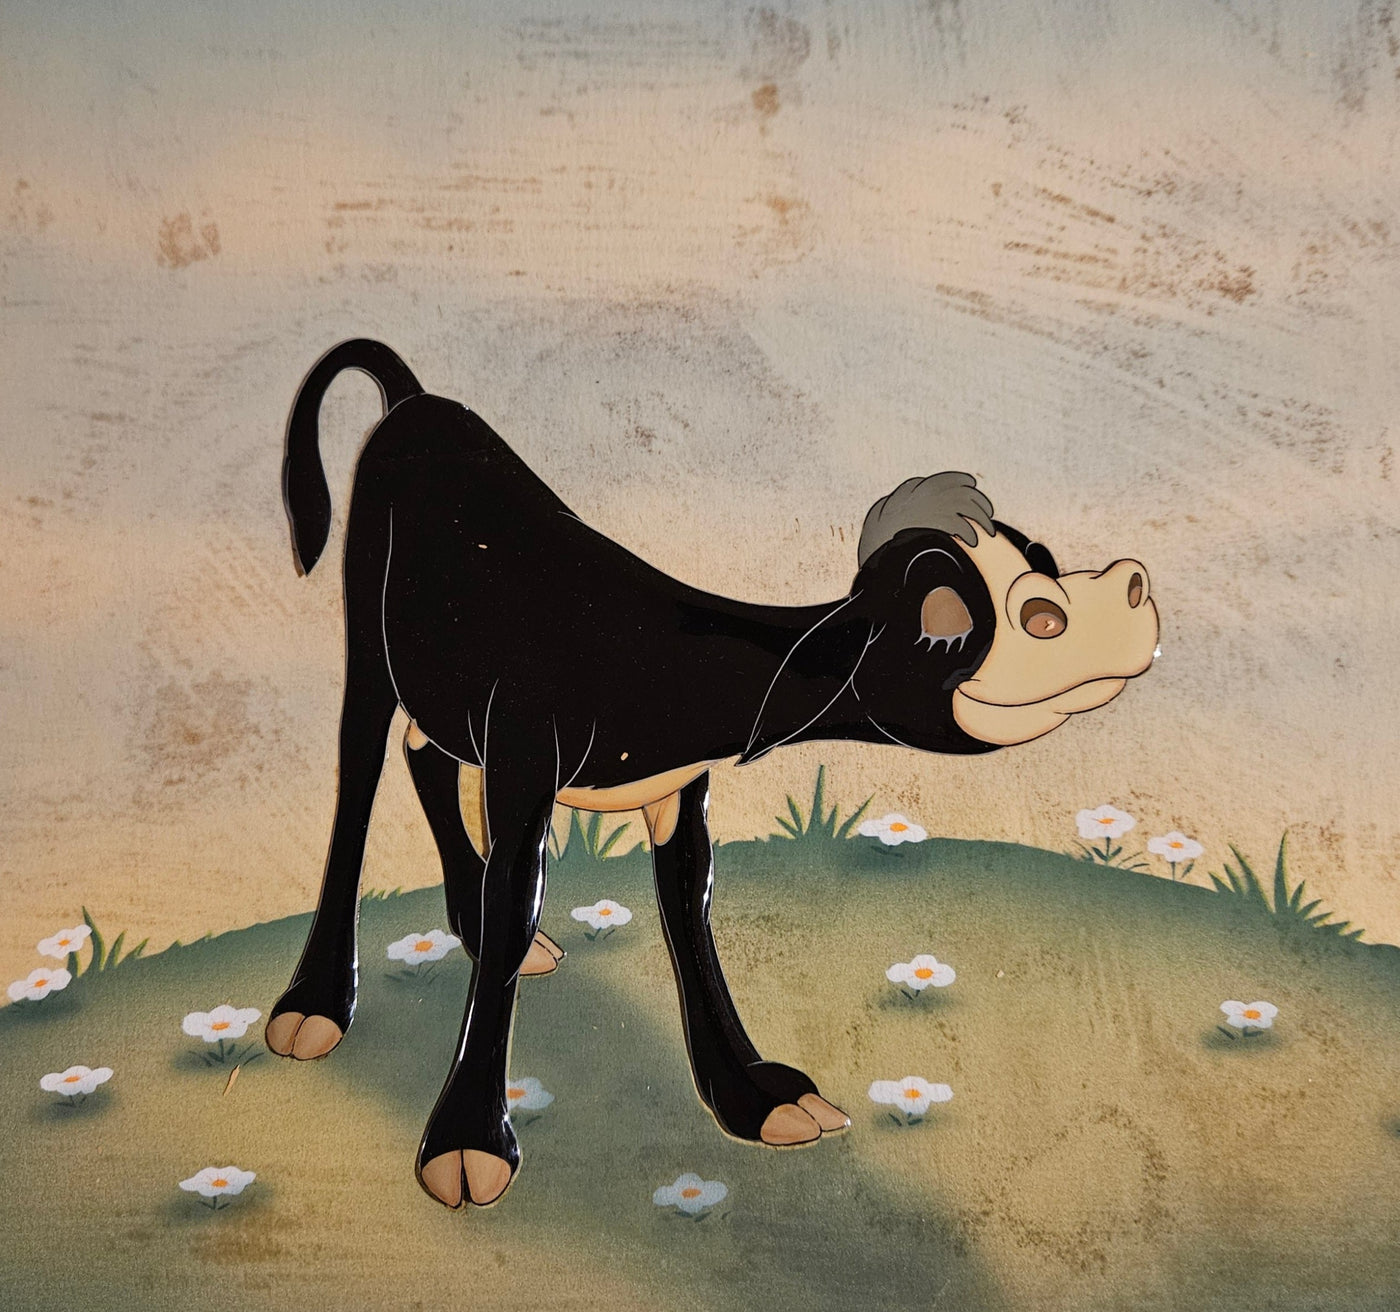 Original Walt Disney Production Cel on Courvoisier Background from Ferdinand the Bull